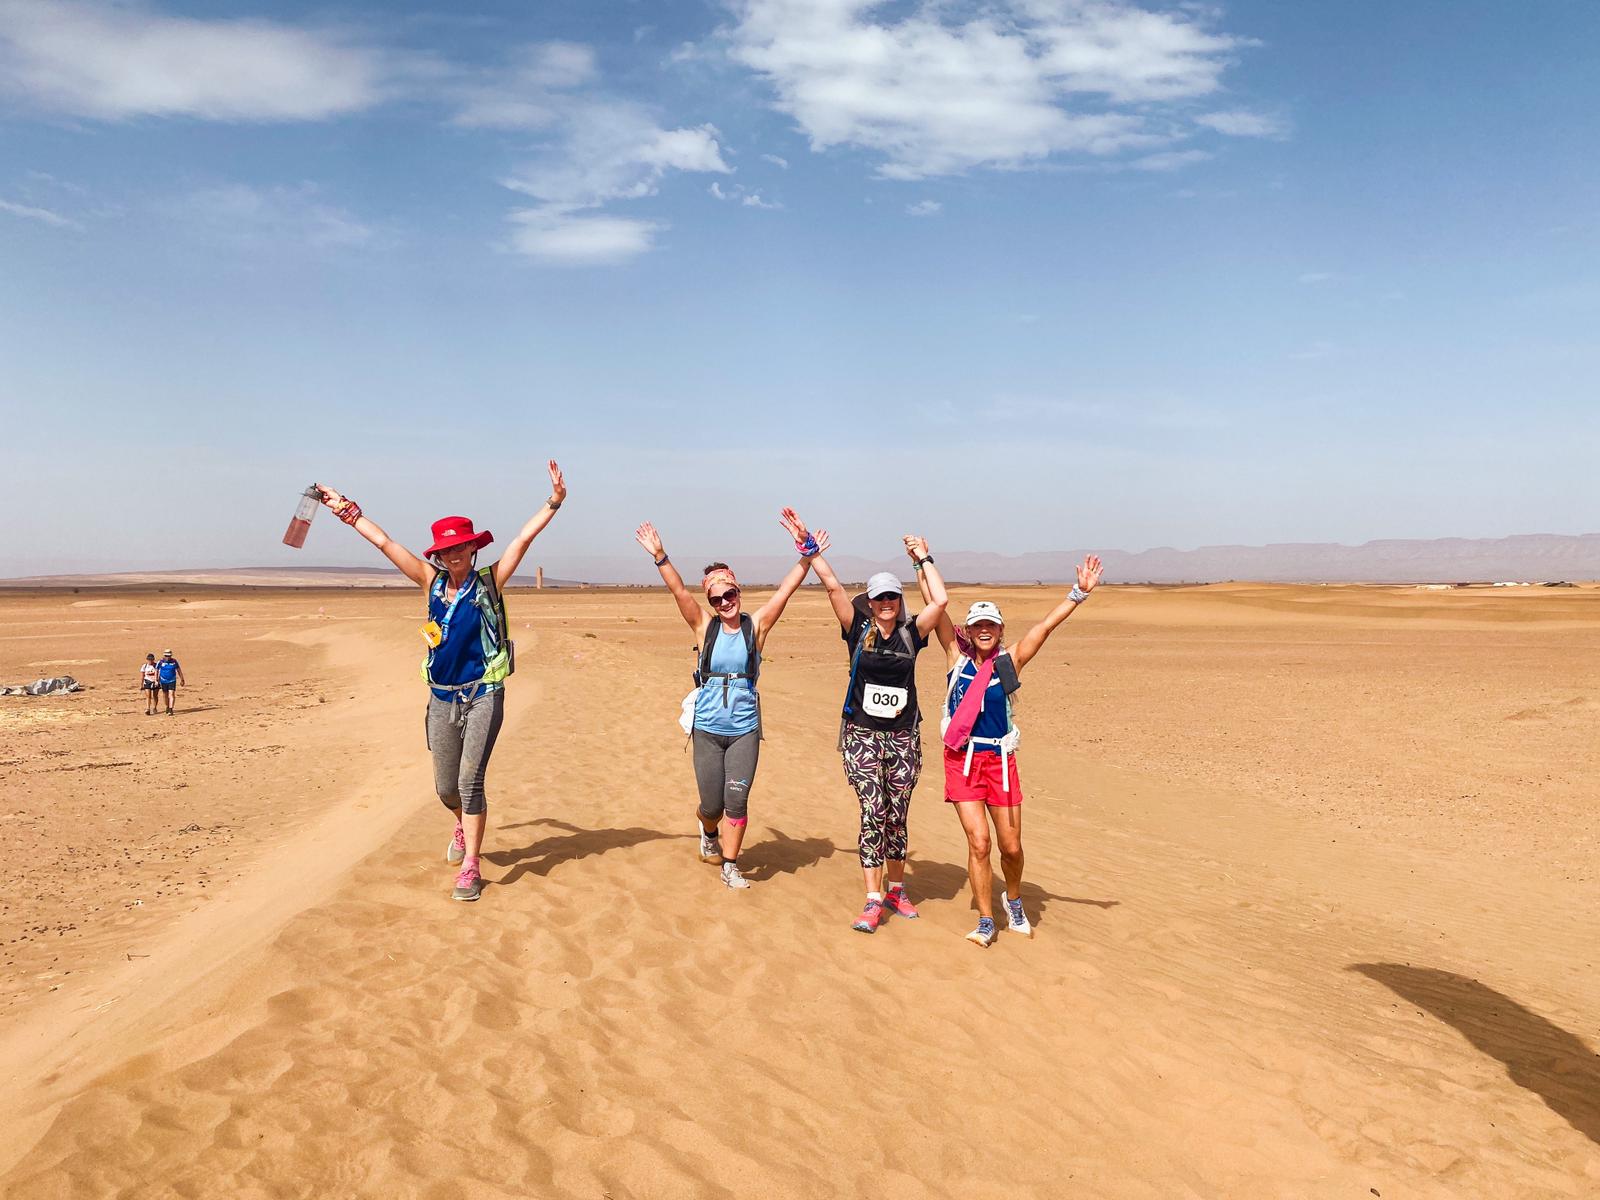 130 challengers take on the Saharan Challenge - 2 marathons over 2 days!